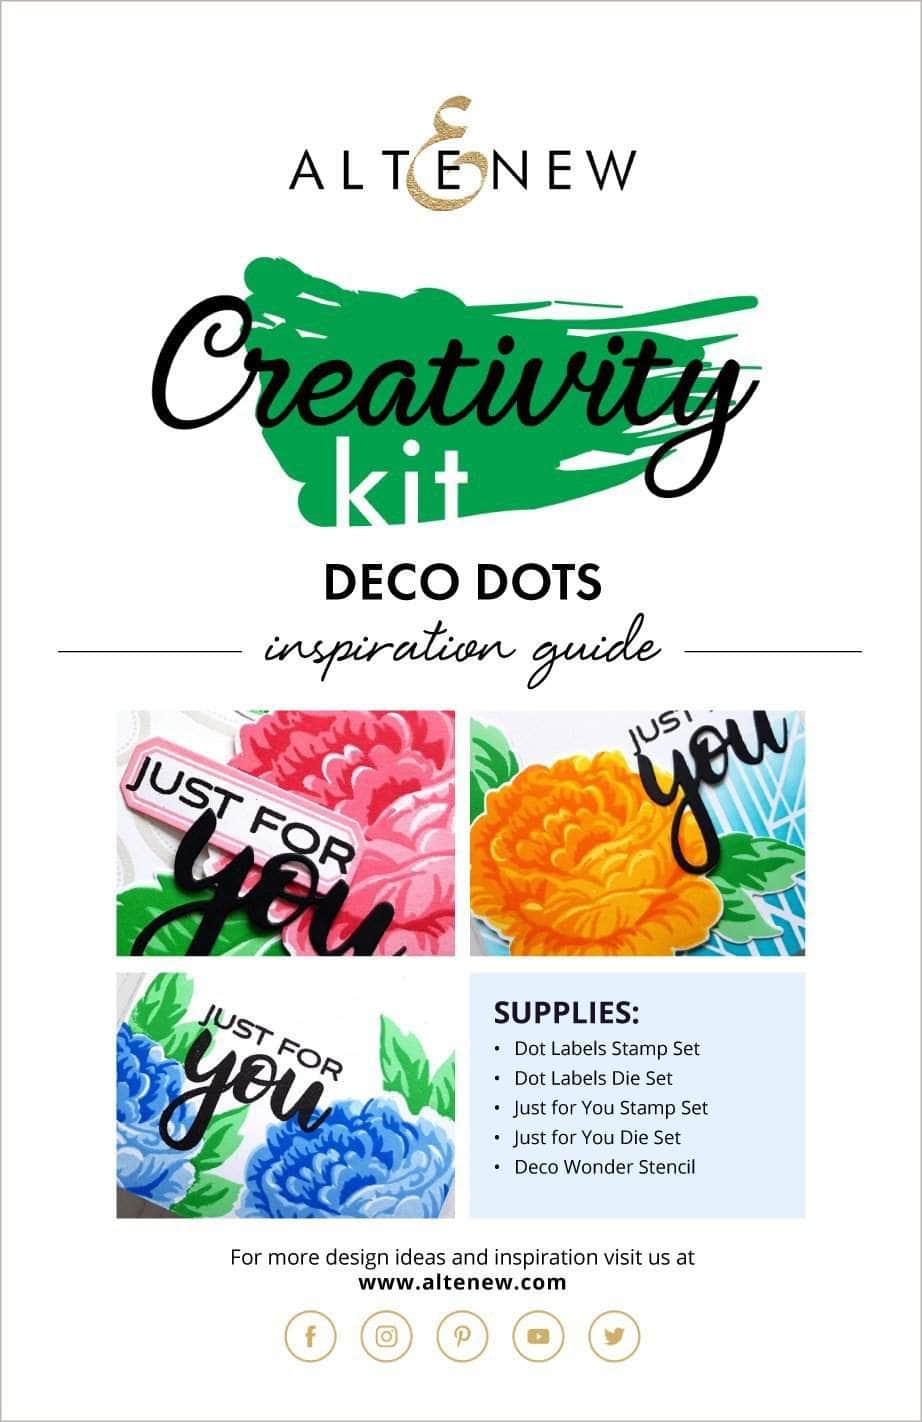 Printed Media Deco Dots Creativity Kit Inspiration Guide